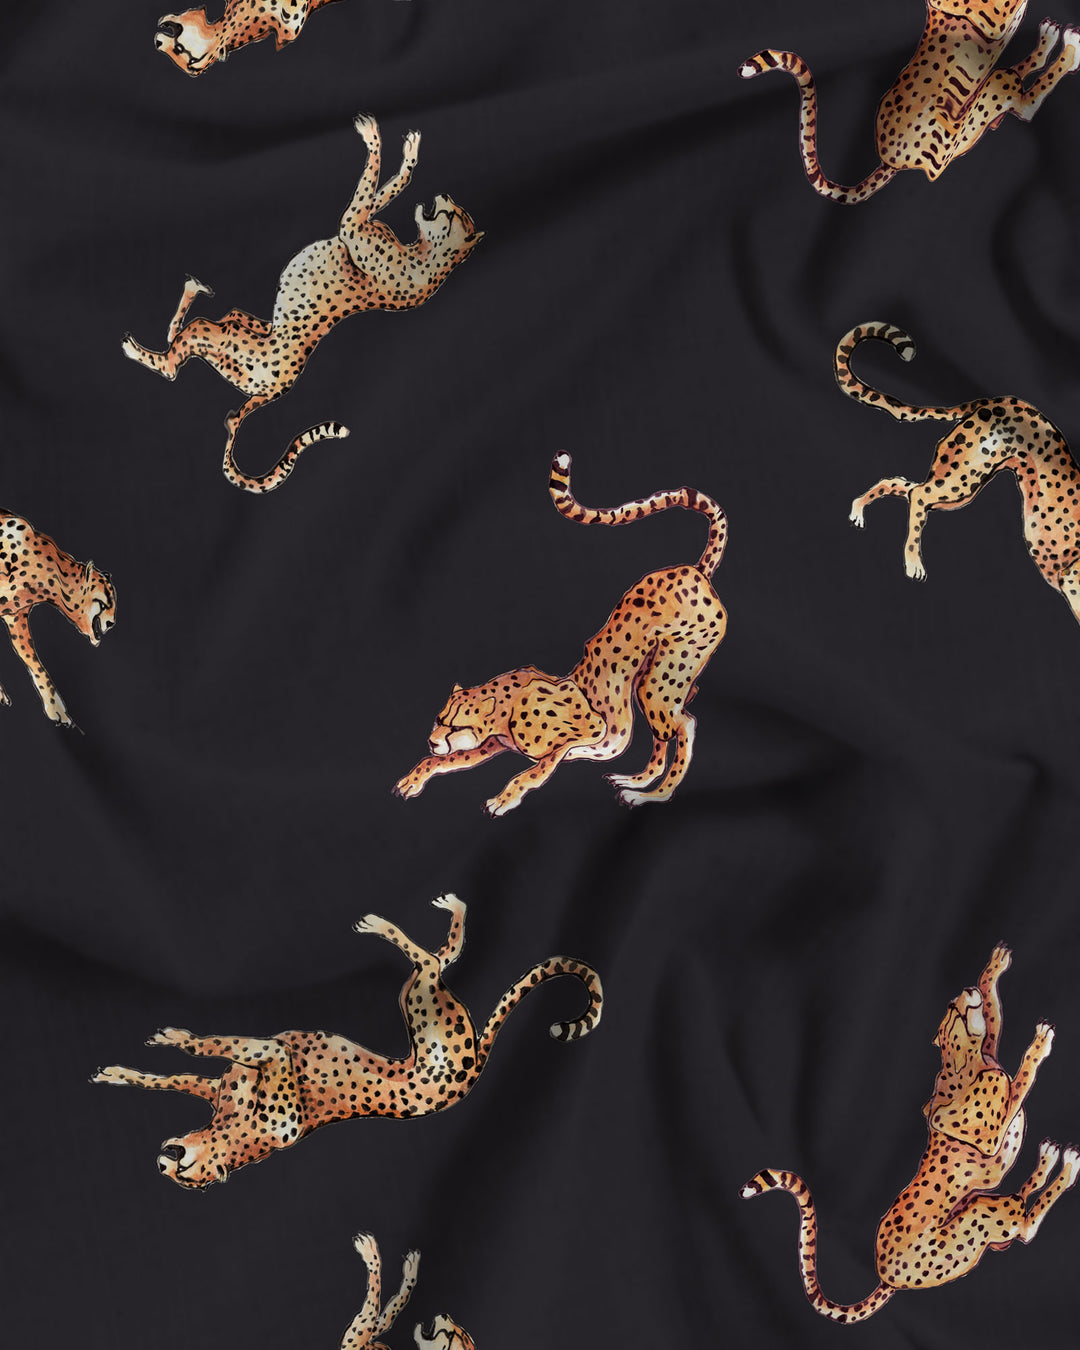 Jumping Cheetahs Pattern Detail - Woodstock Laundry UK